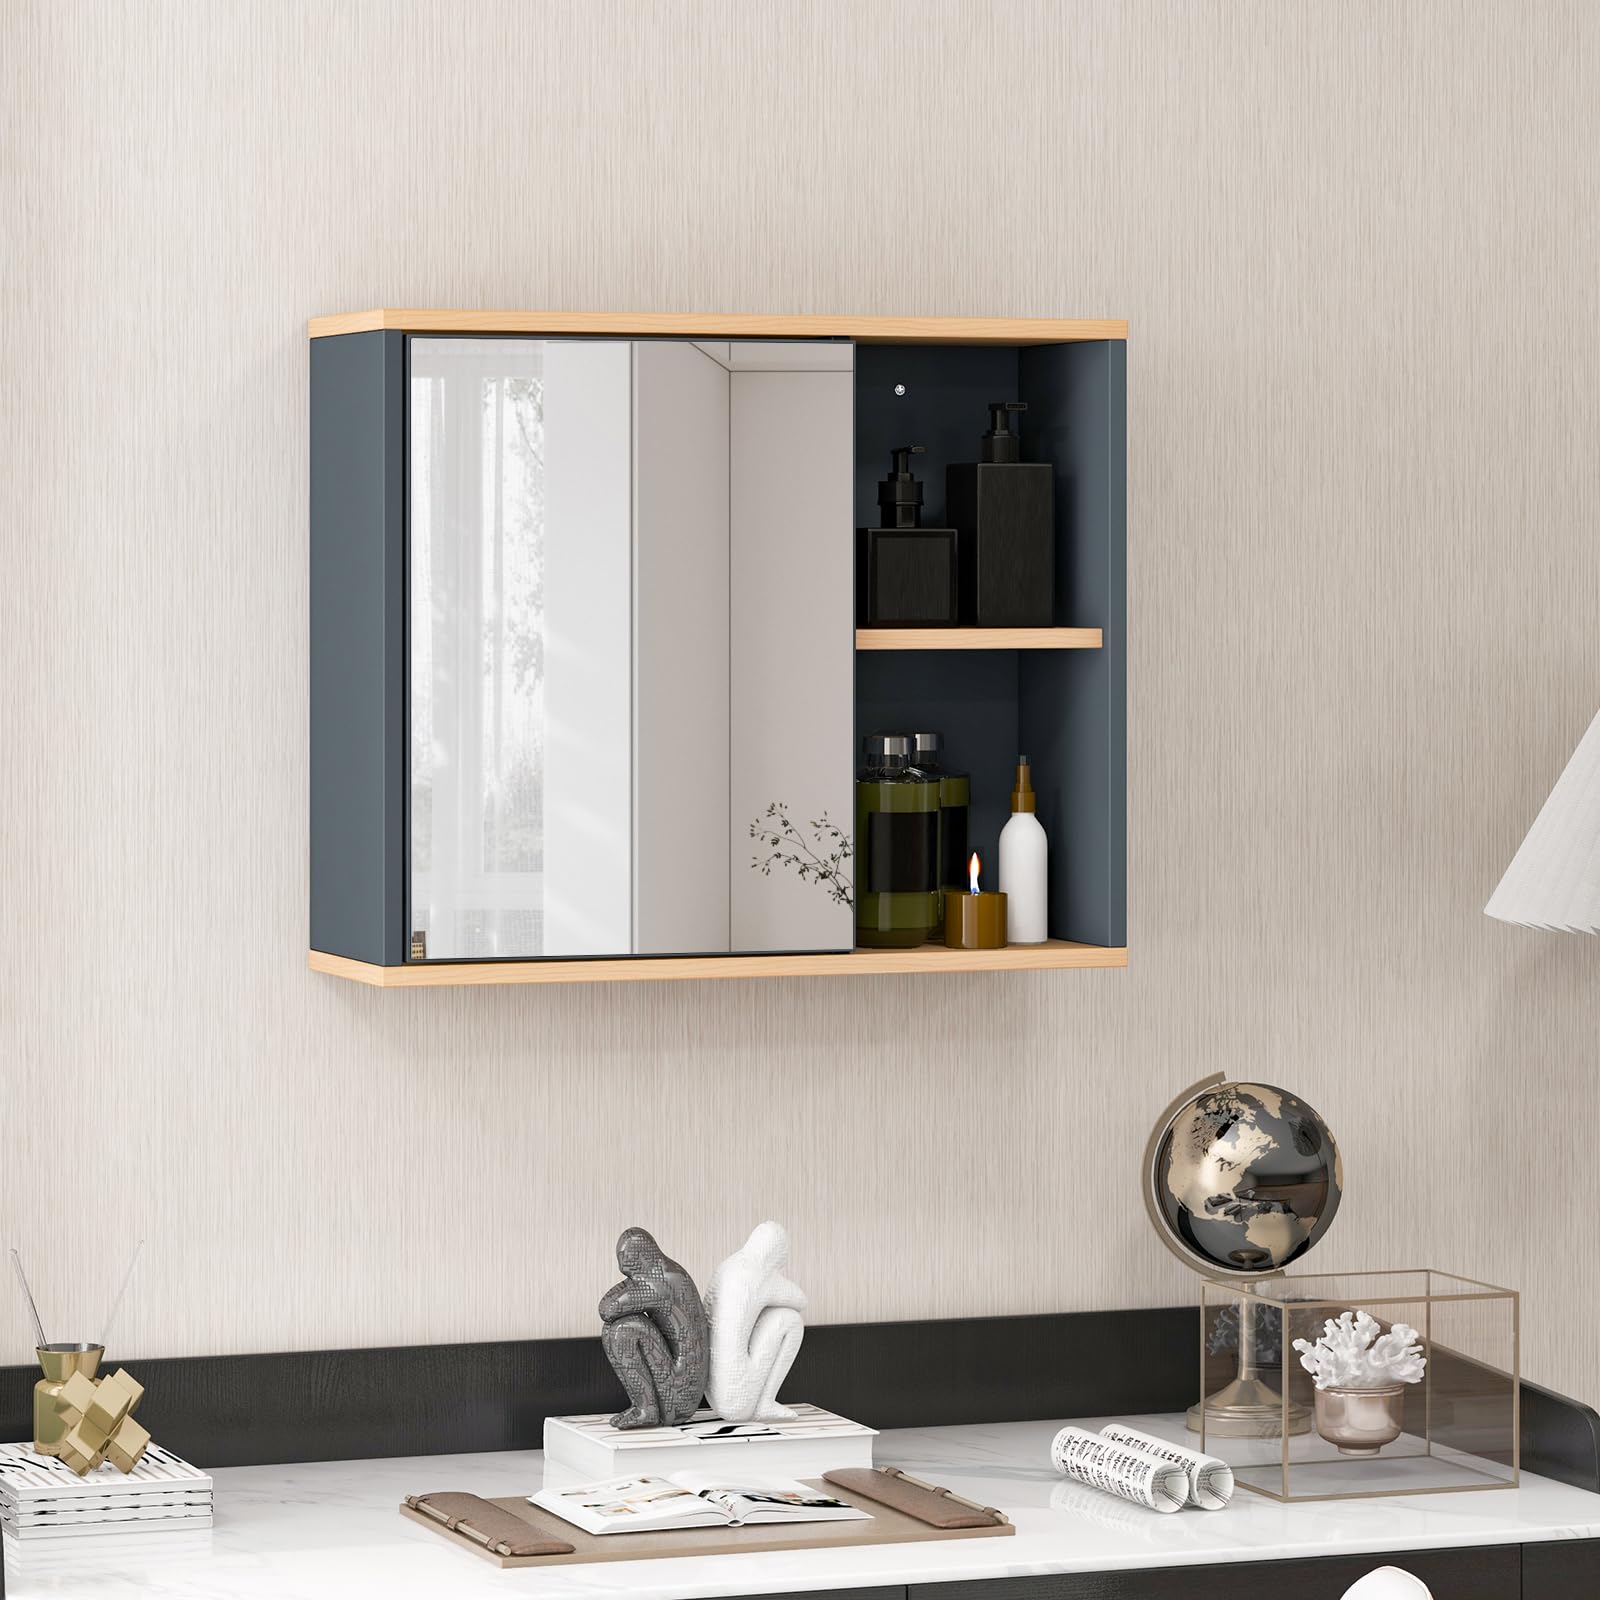 Tangkula Mirrored Medicine Cabinet, Bathroom Wall Mounted Cabinet